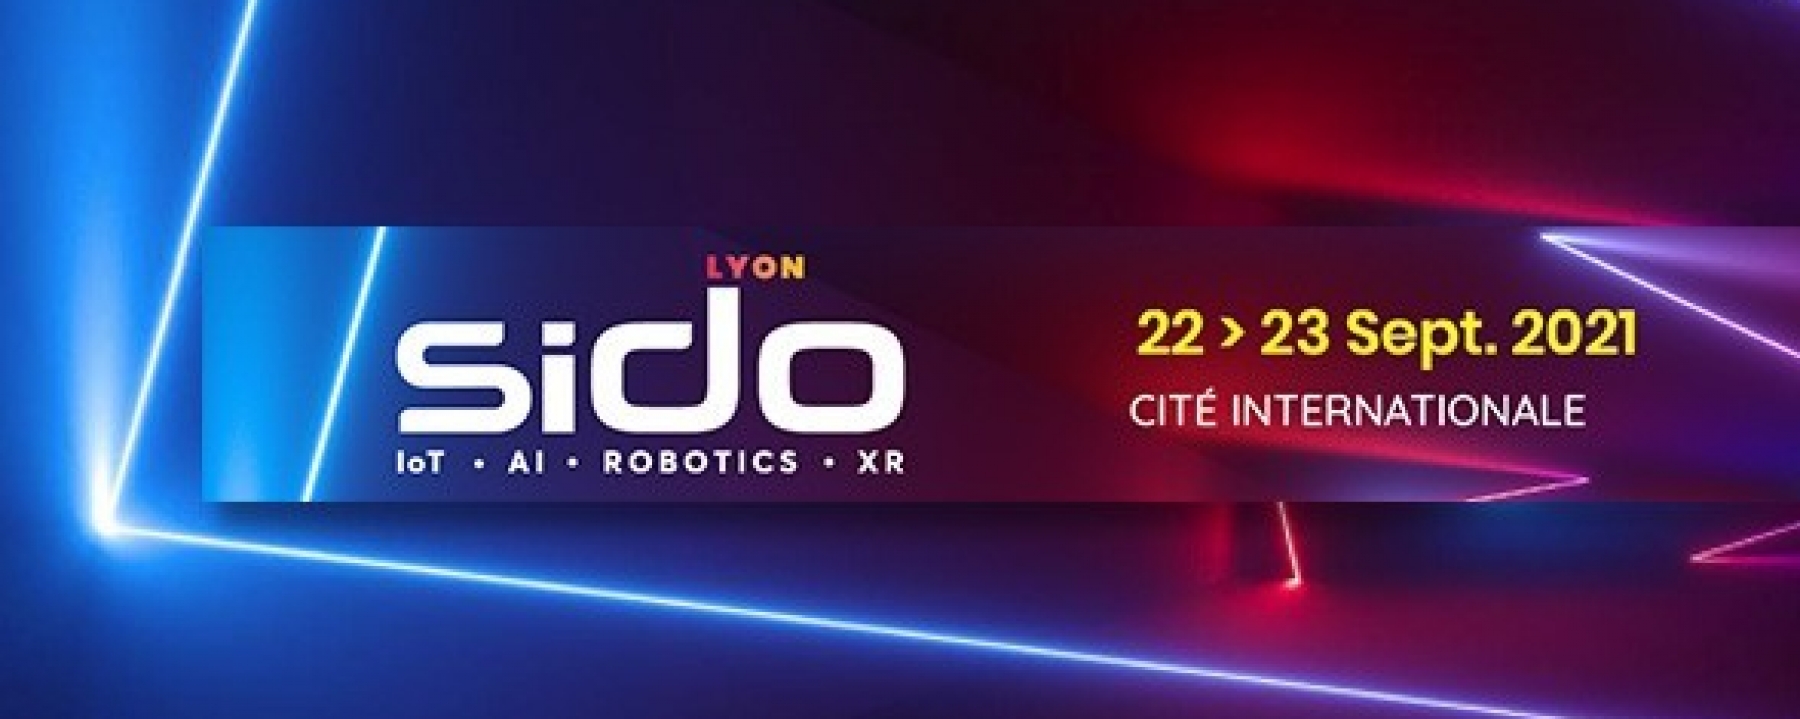 SIDO Lyon 22 et 23 septembre 2021